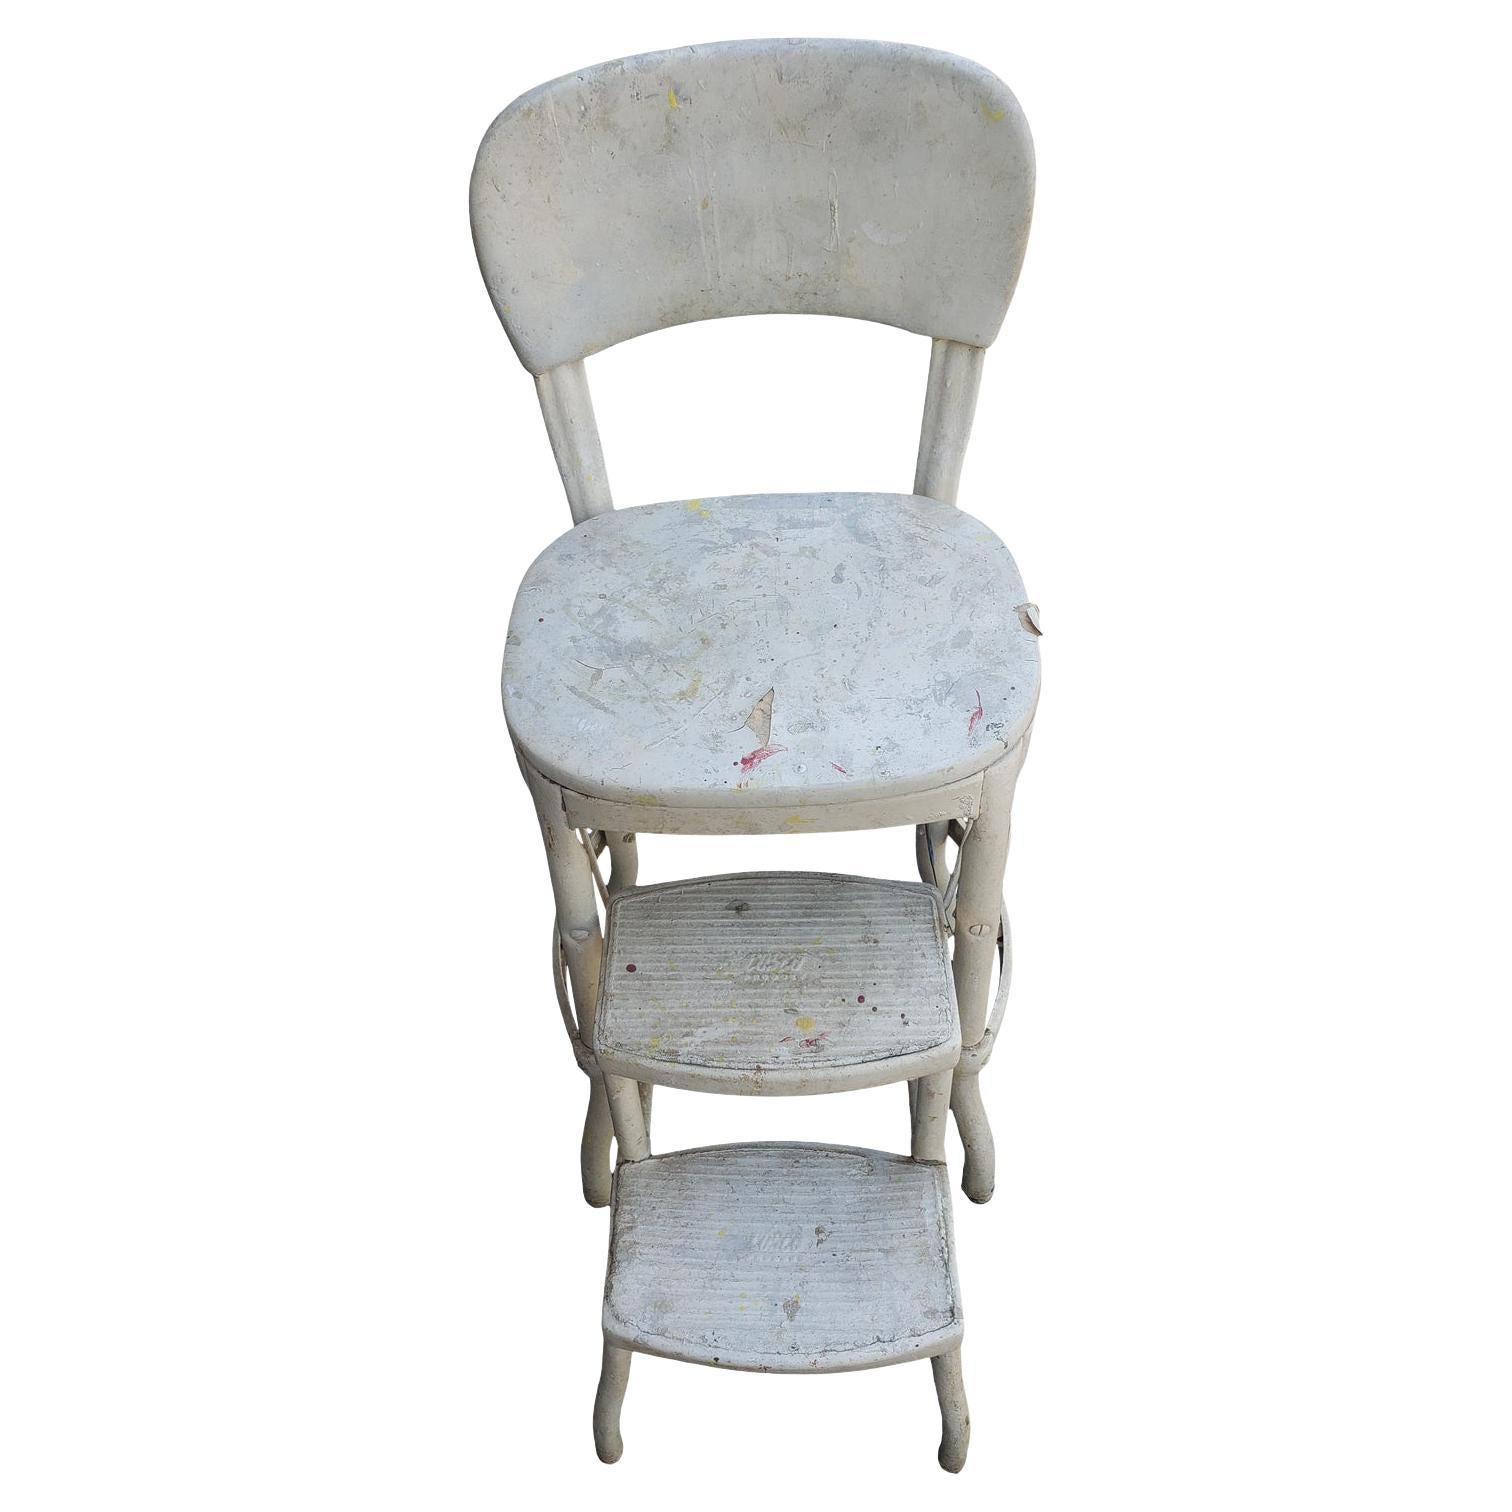 Cosco Vintage-Stephocker, Vintage-Stuhl, ca. 1950er Jahre